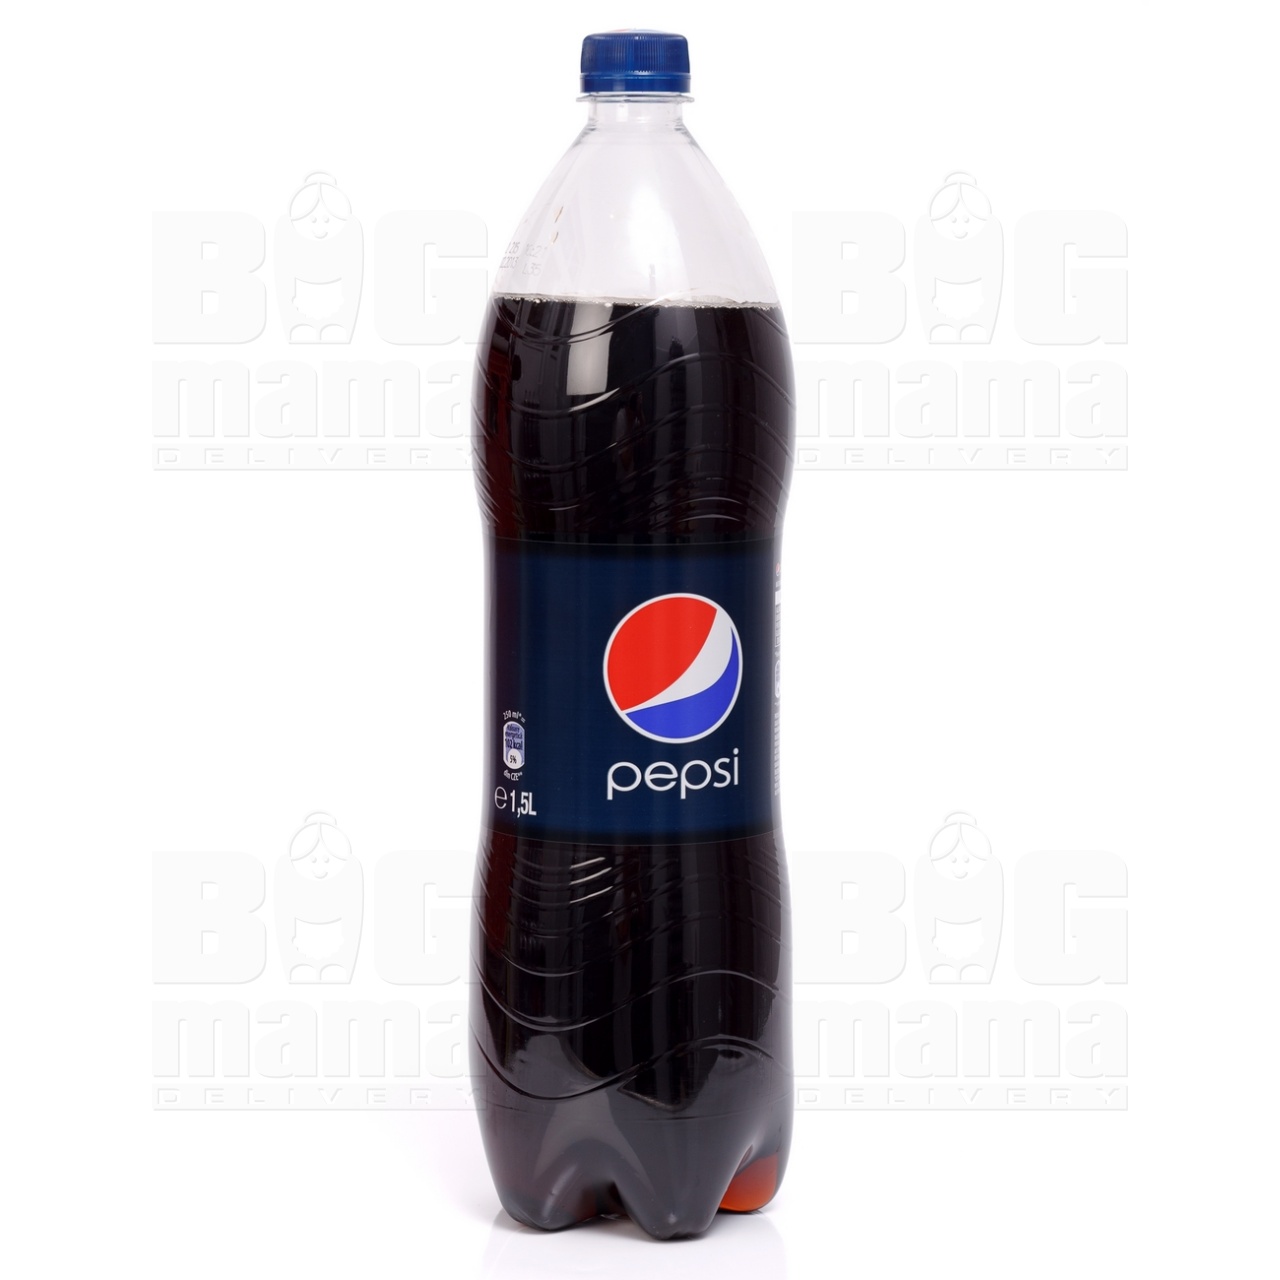 Product #92 image - Pepsi 1,5L